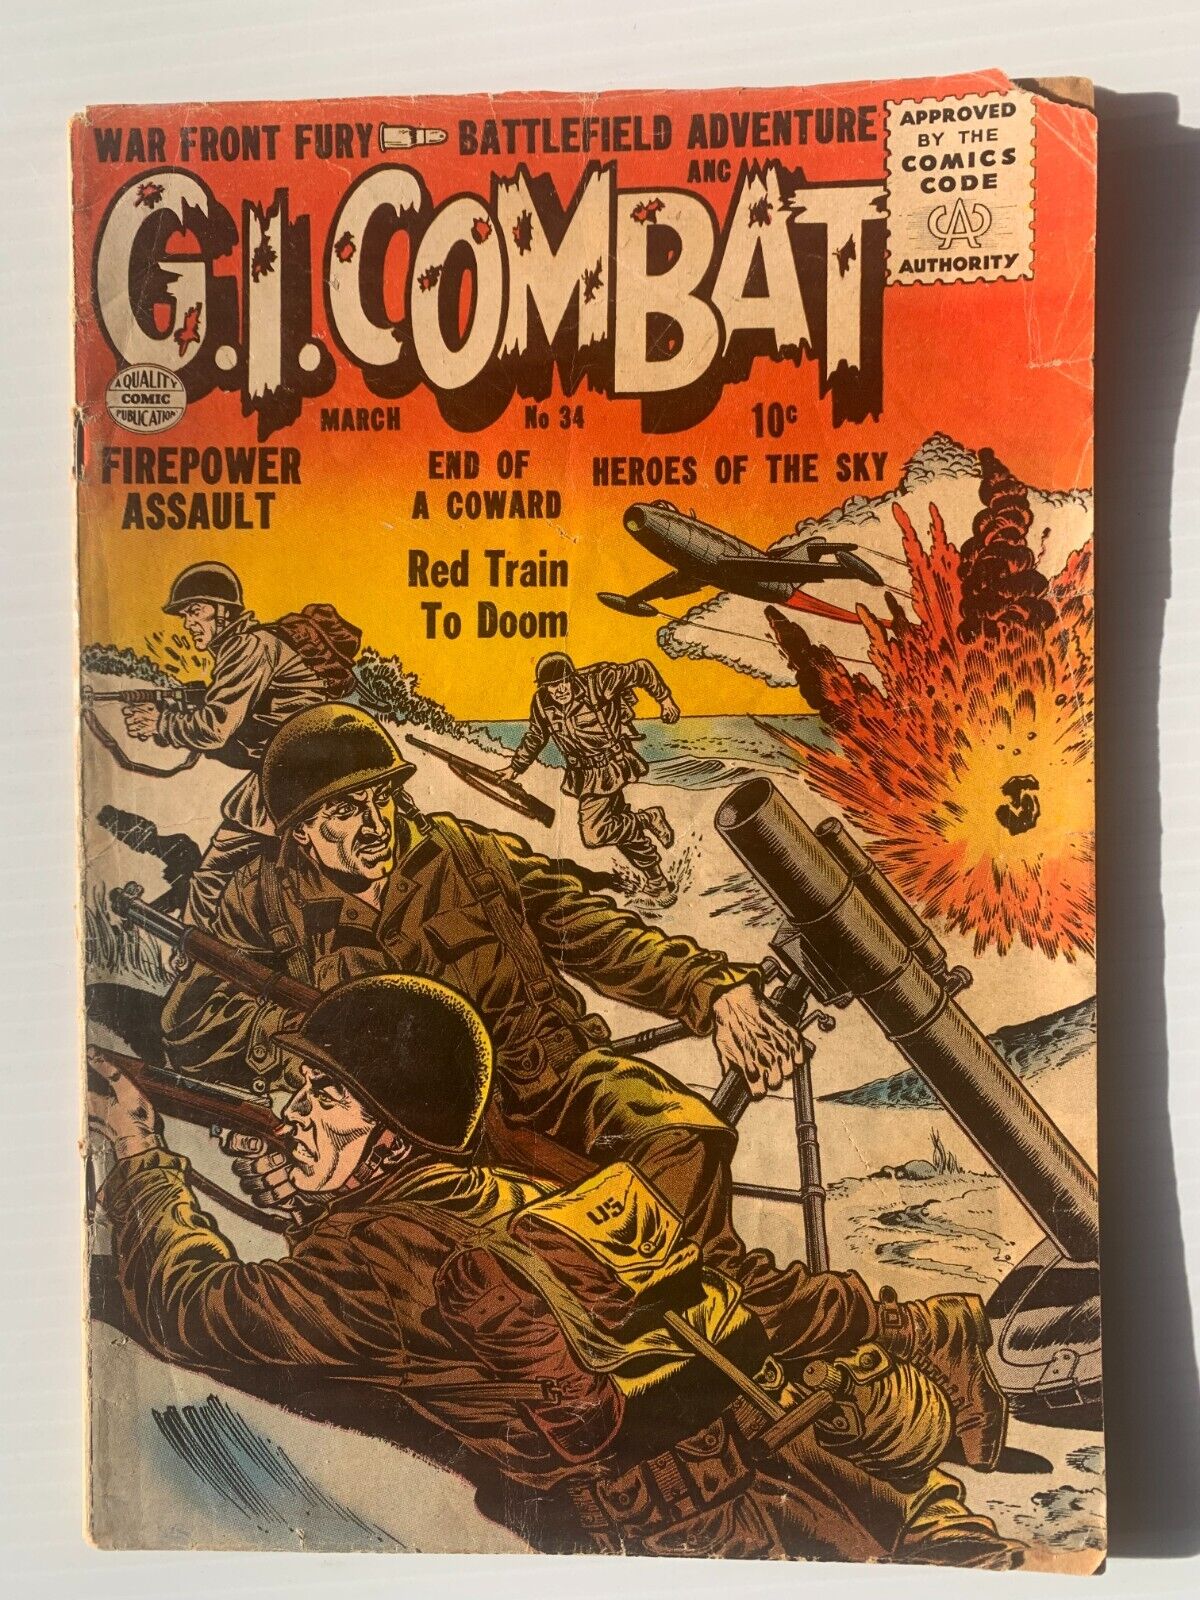 G. I. COMBAT #34 1956 - Early Silver Age Era